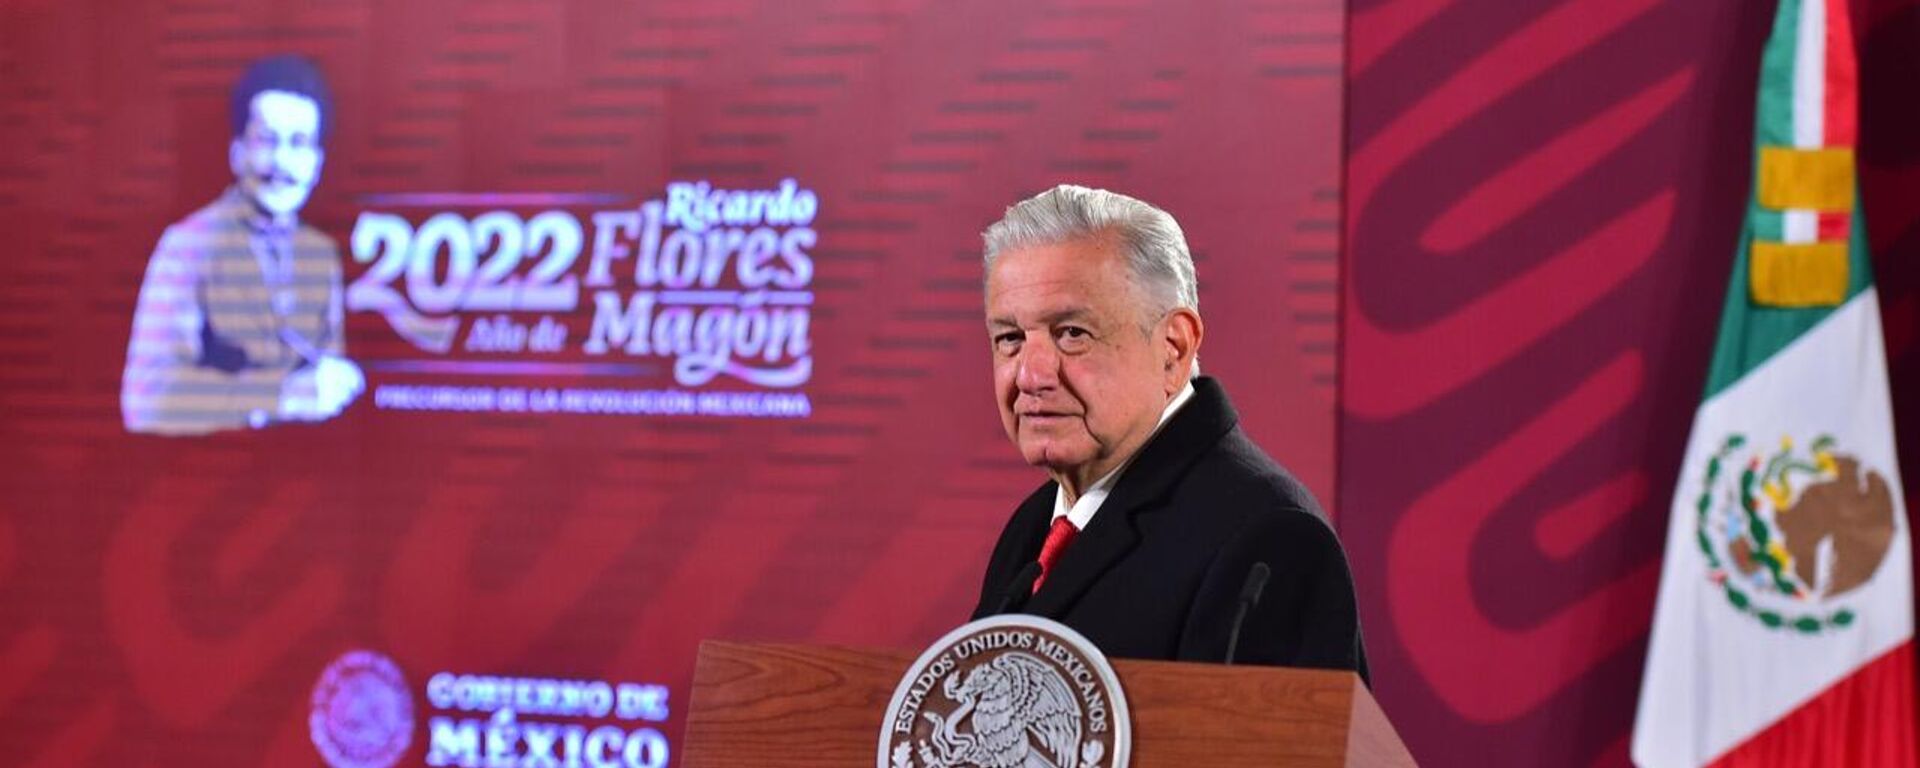 El presidente de México, Andrés Manuel López Obrador. - Sputnik Mundo, 1920, 15.02.2022